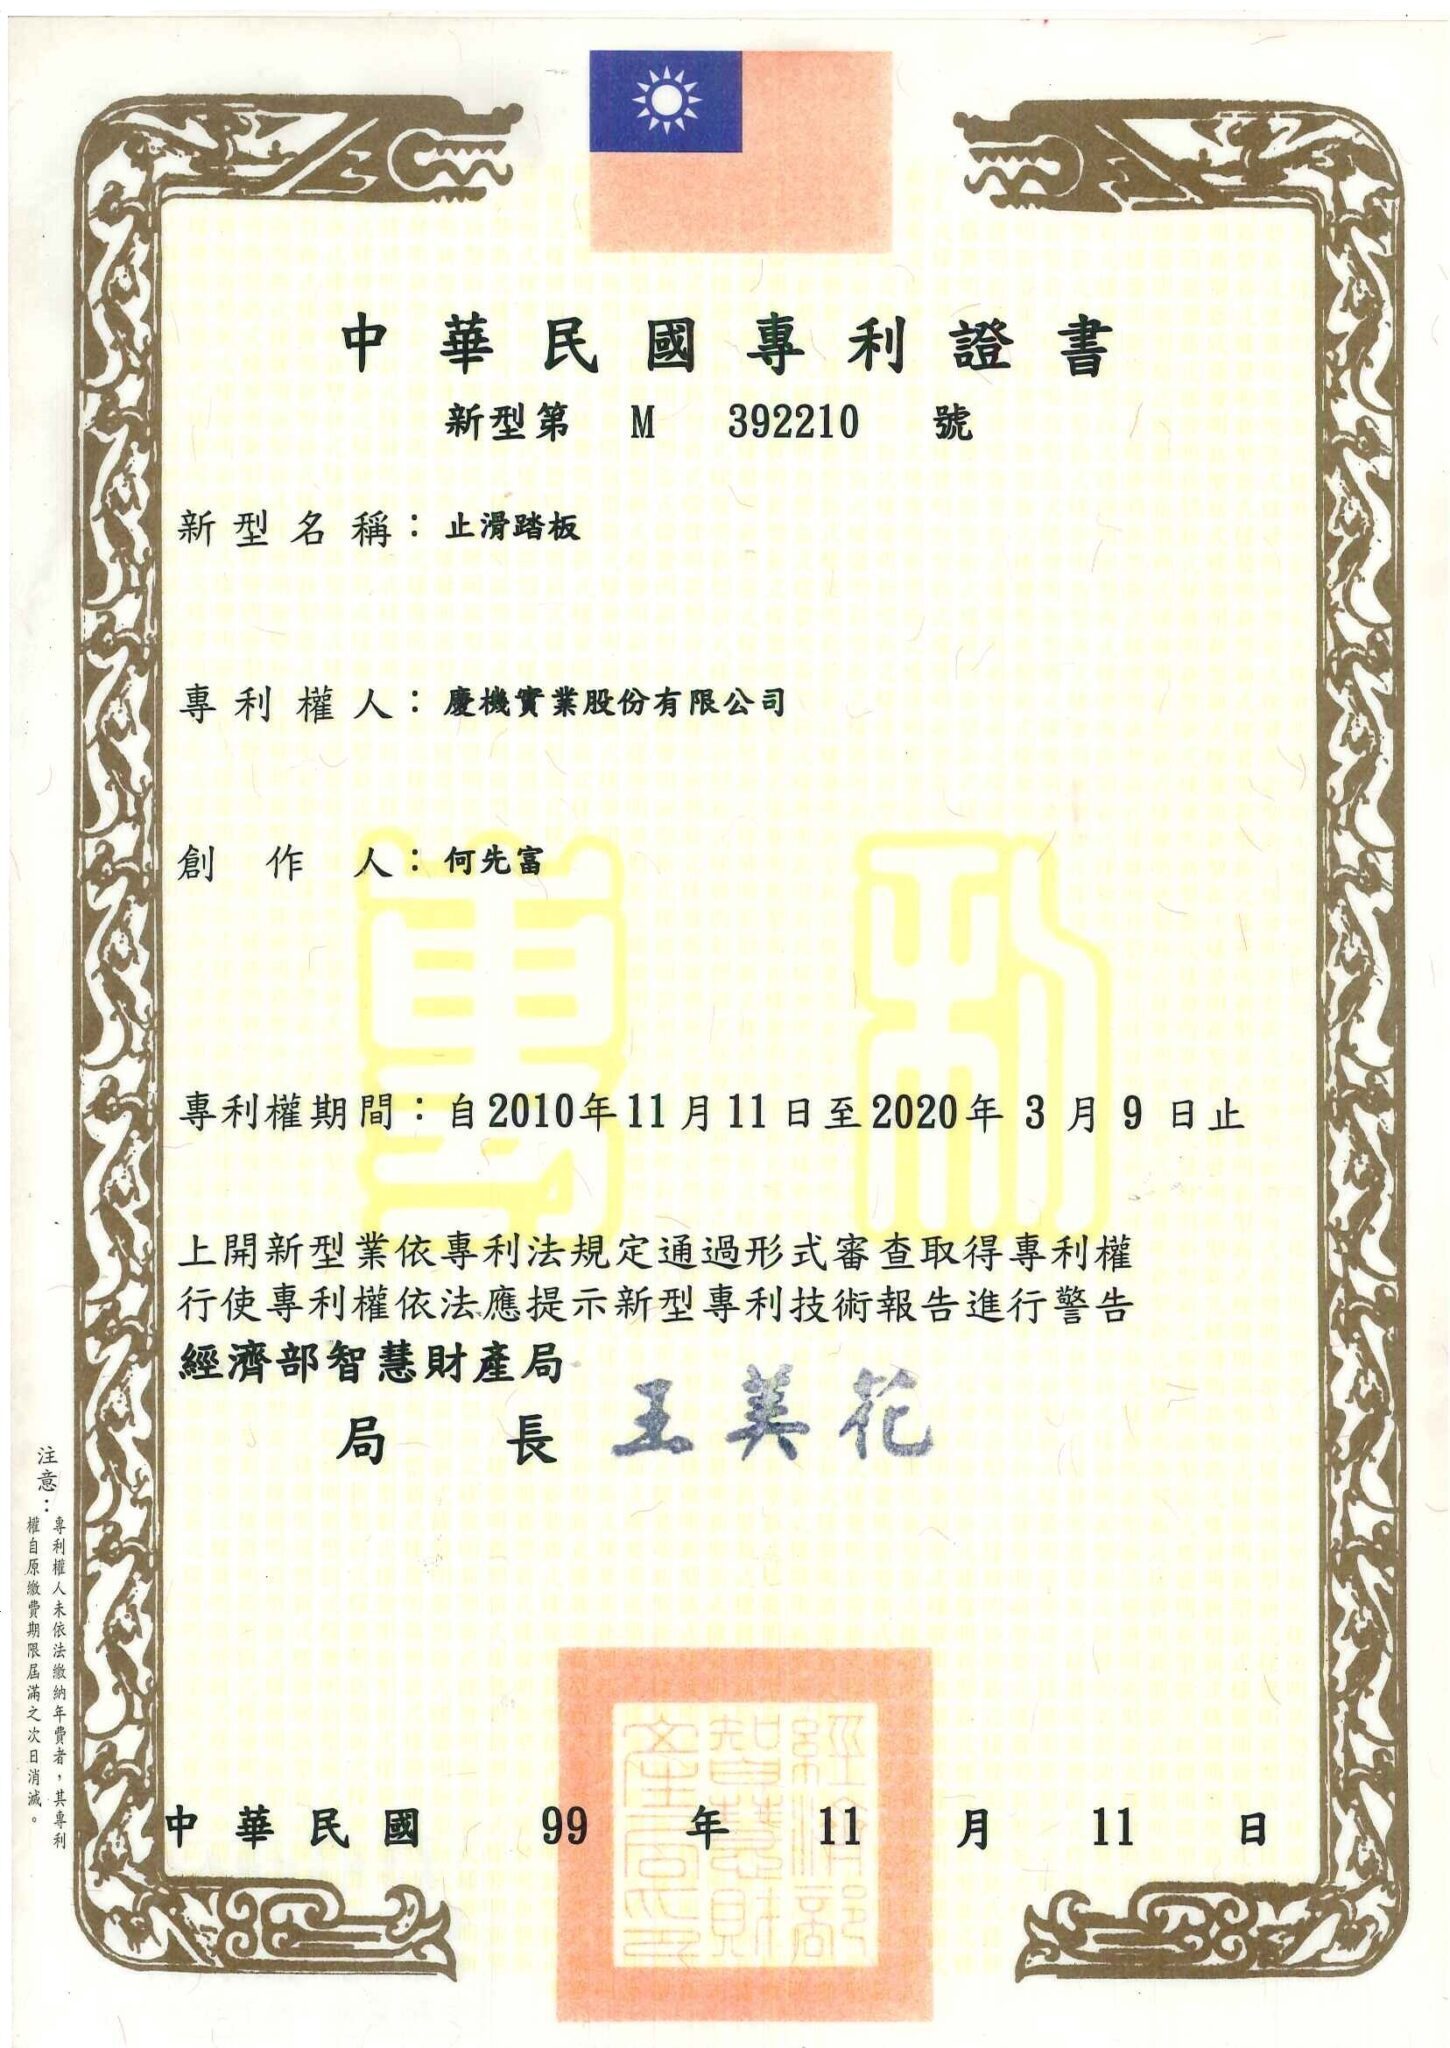 KEN GI patent certificate